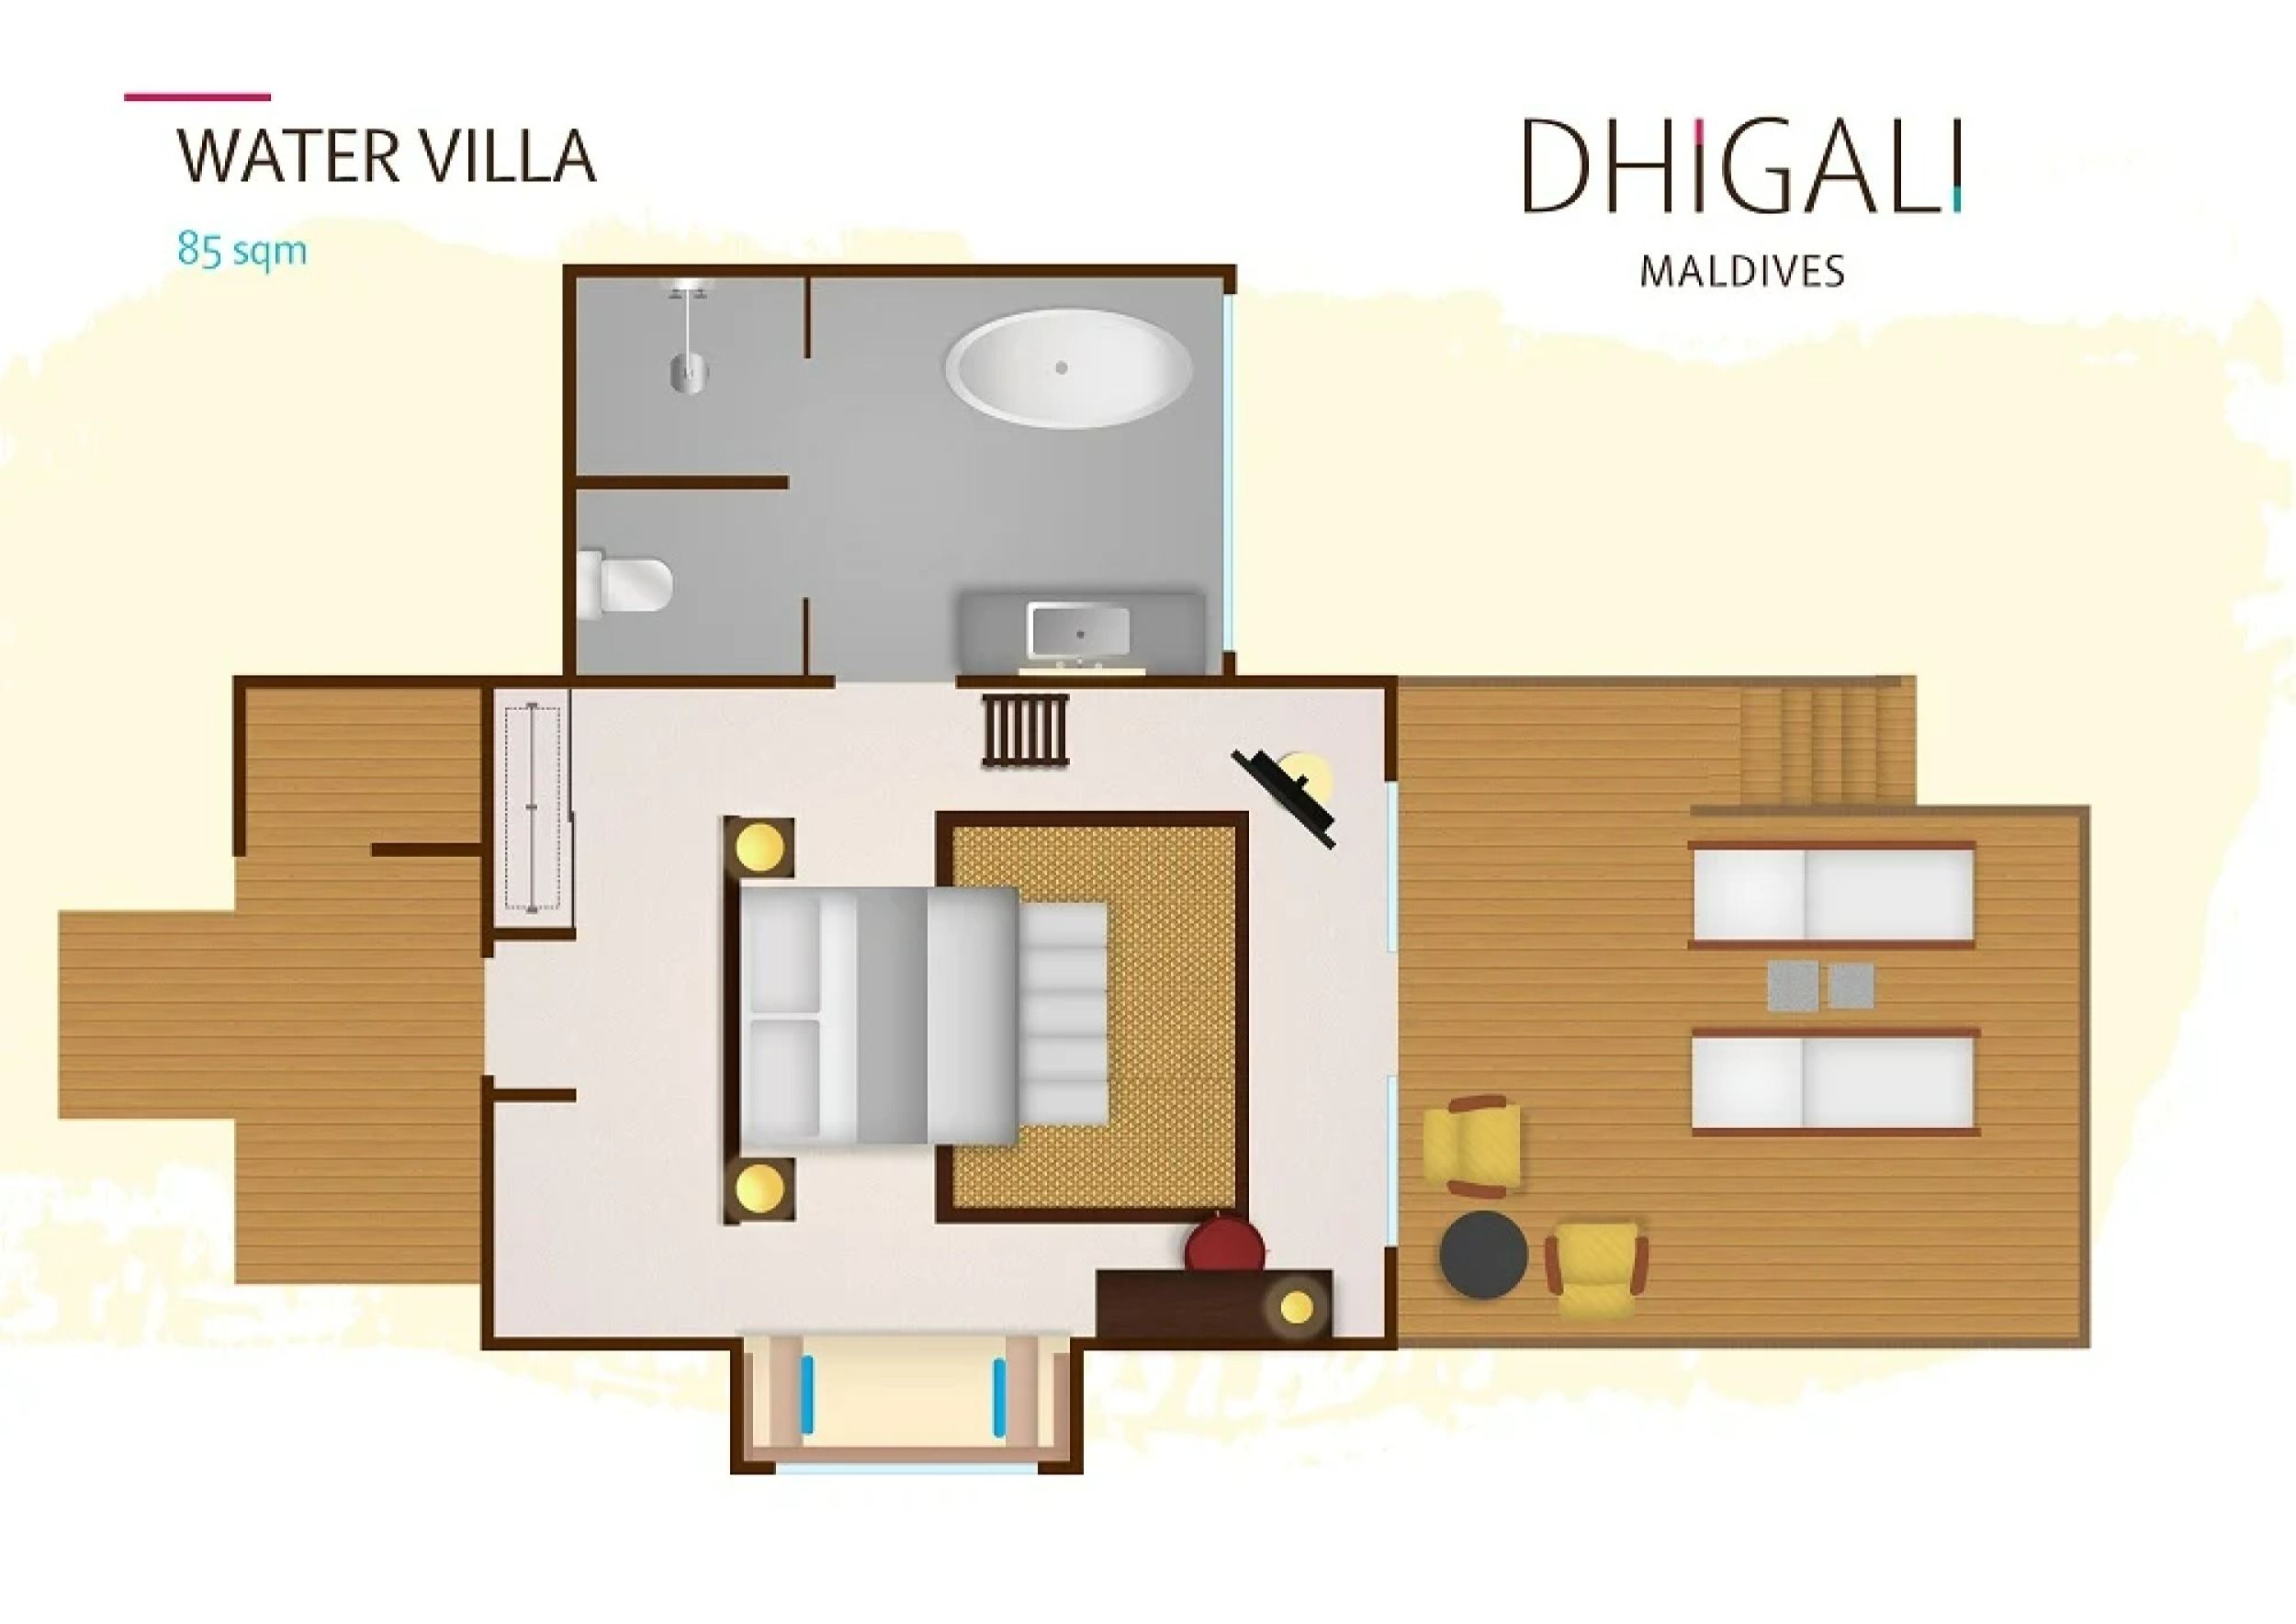 Water Villa - Floor Plan - Dhigali Maldives